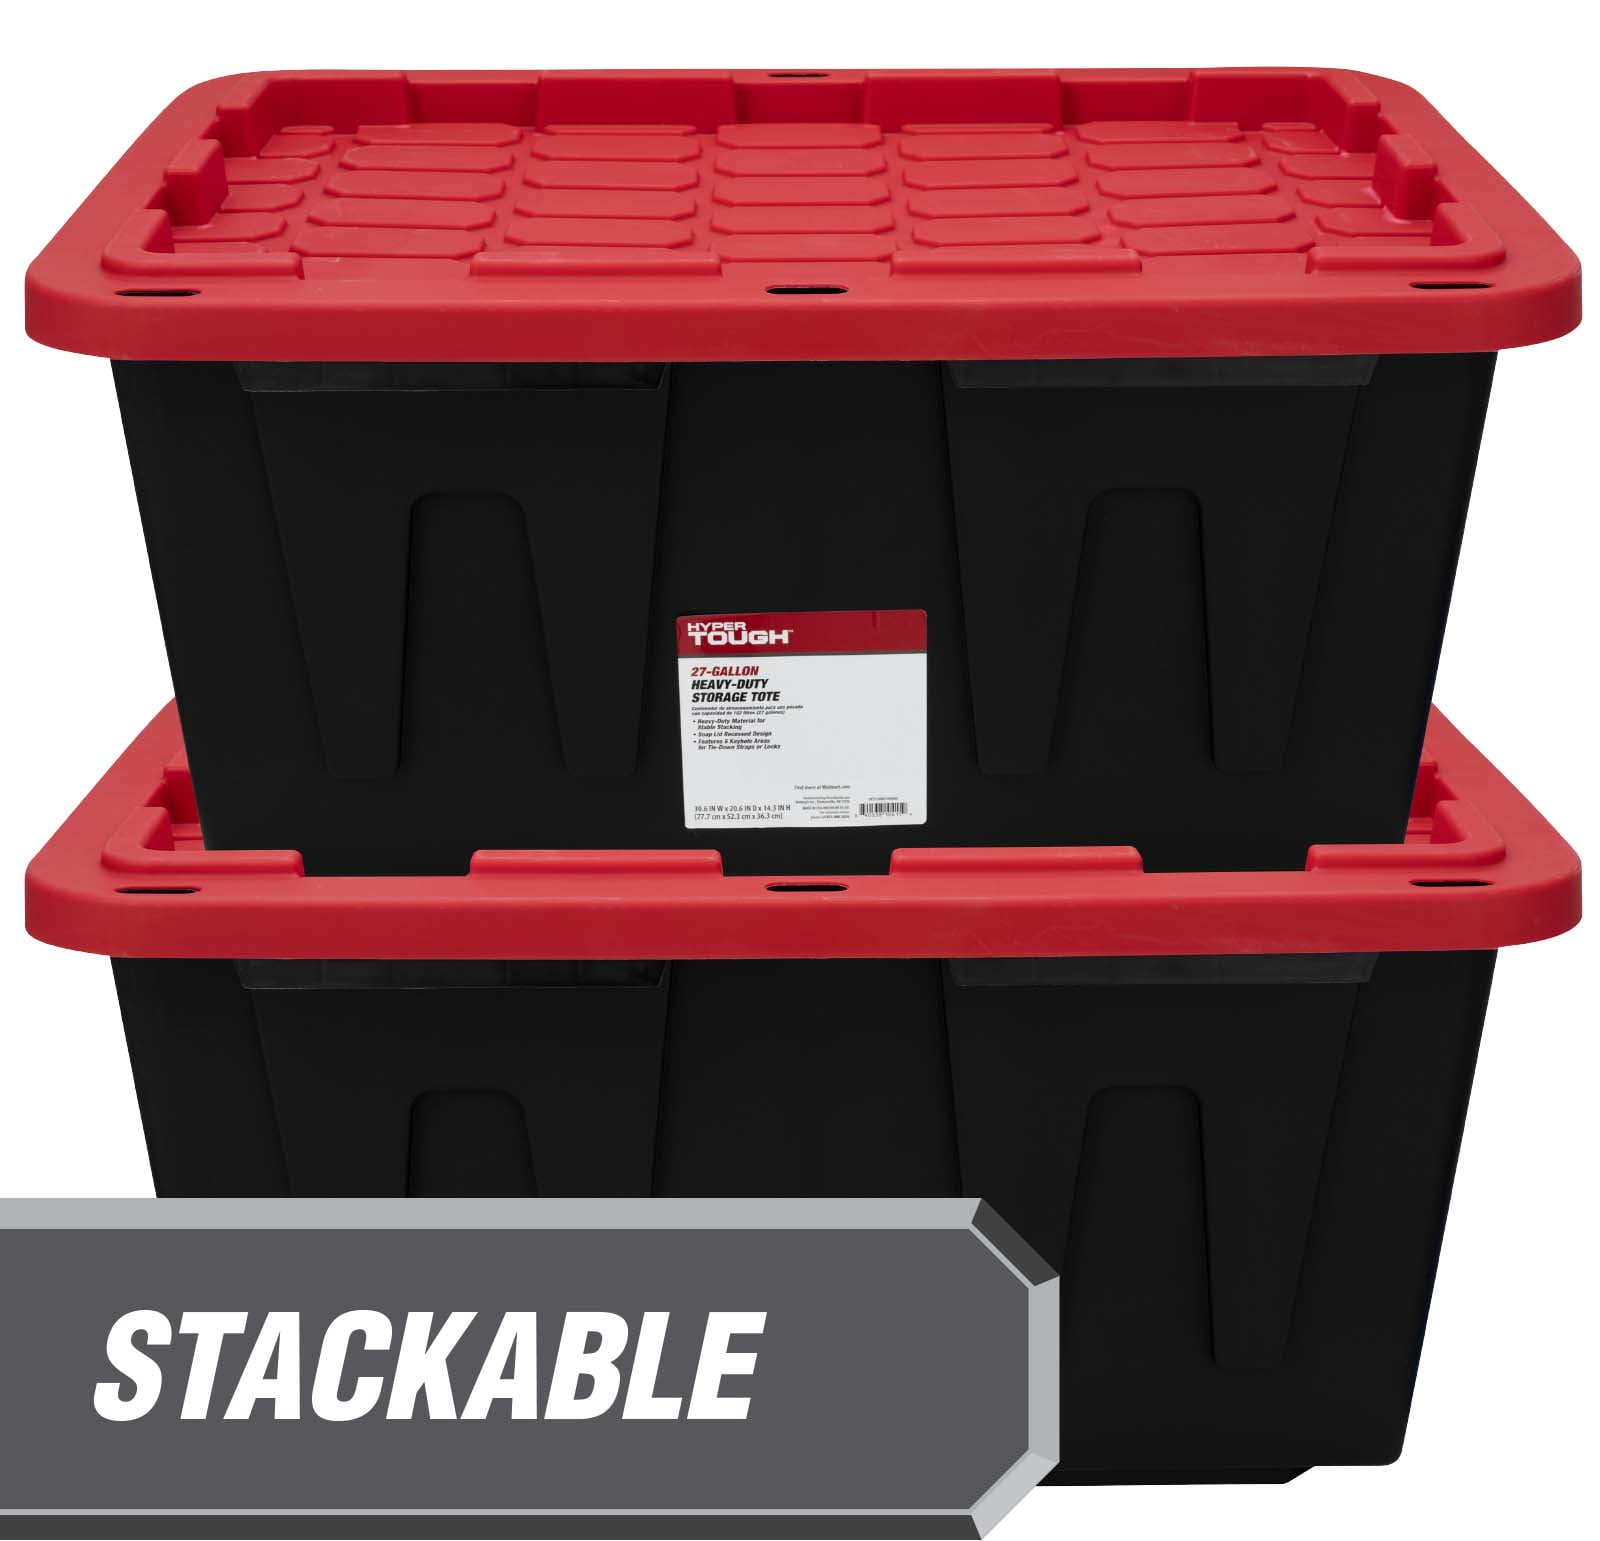 Hasco Wholesale on Instagram: Heavy Duty Stackable 27 gallon